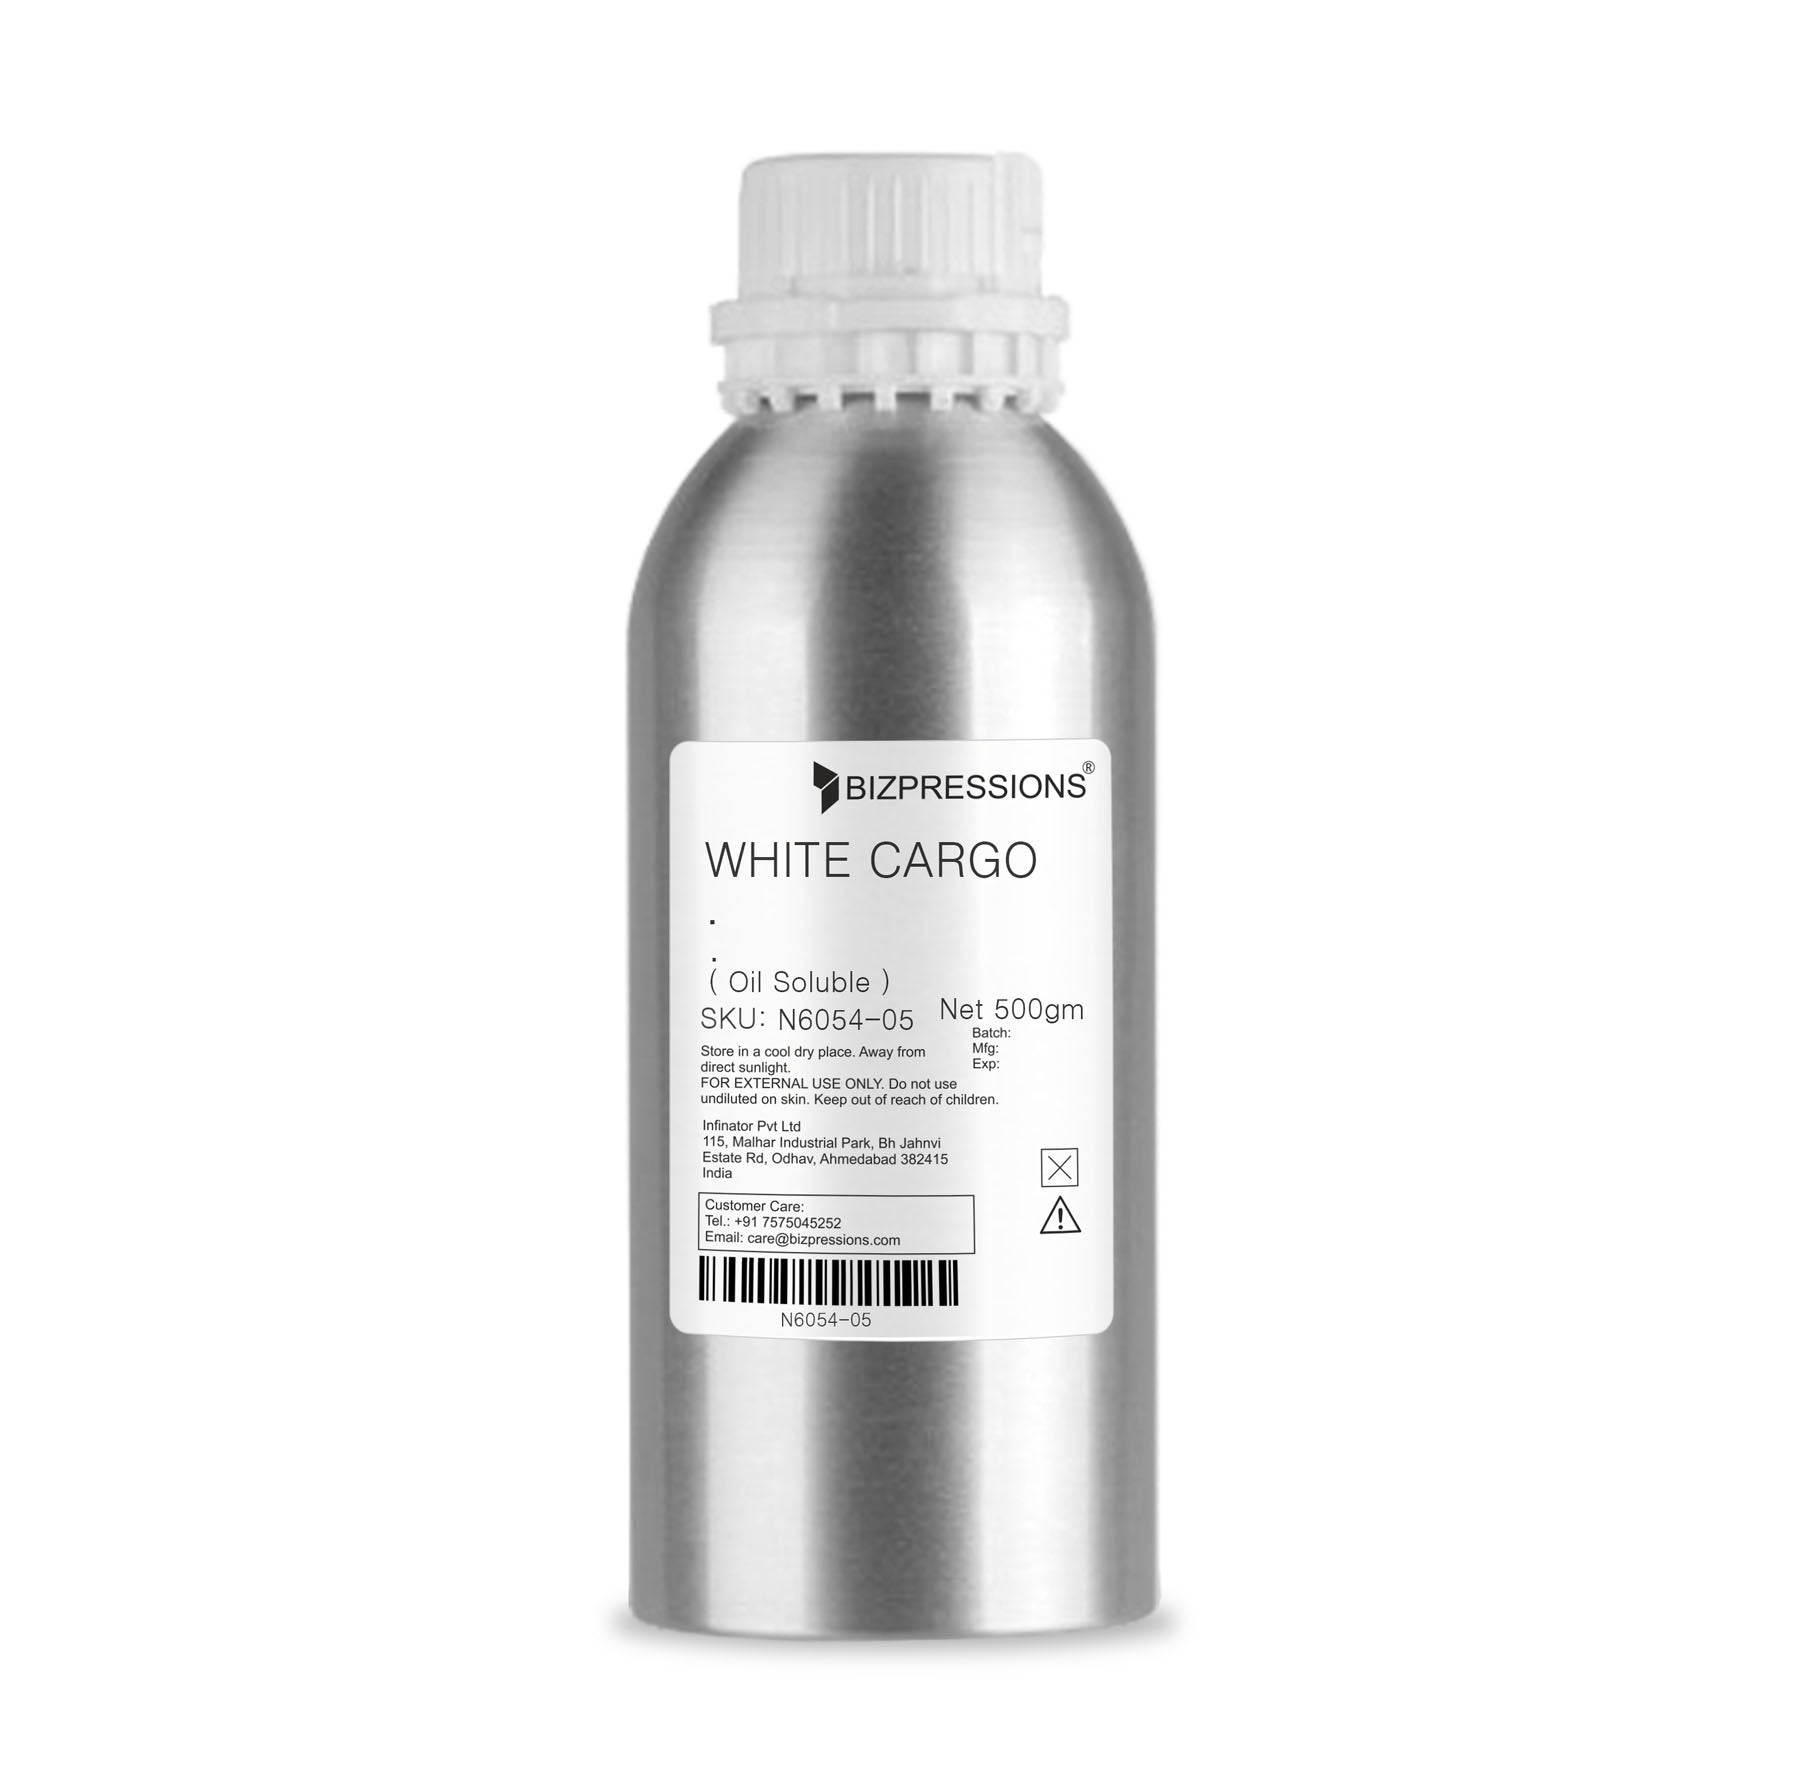 WHITE CARGO - Fragrance ( Oil Soluble ) - 500 gm